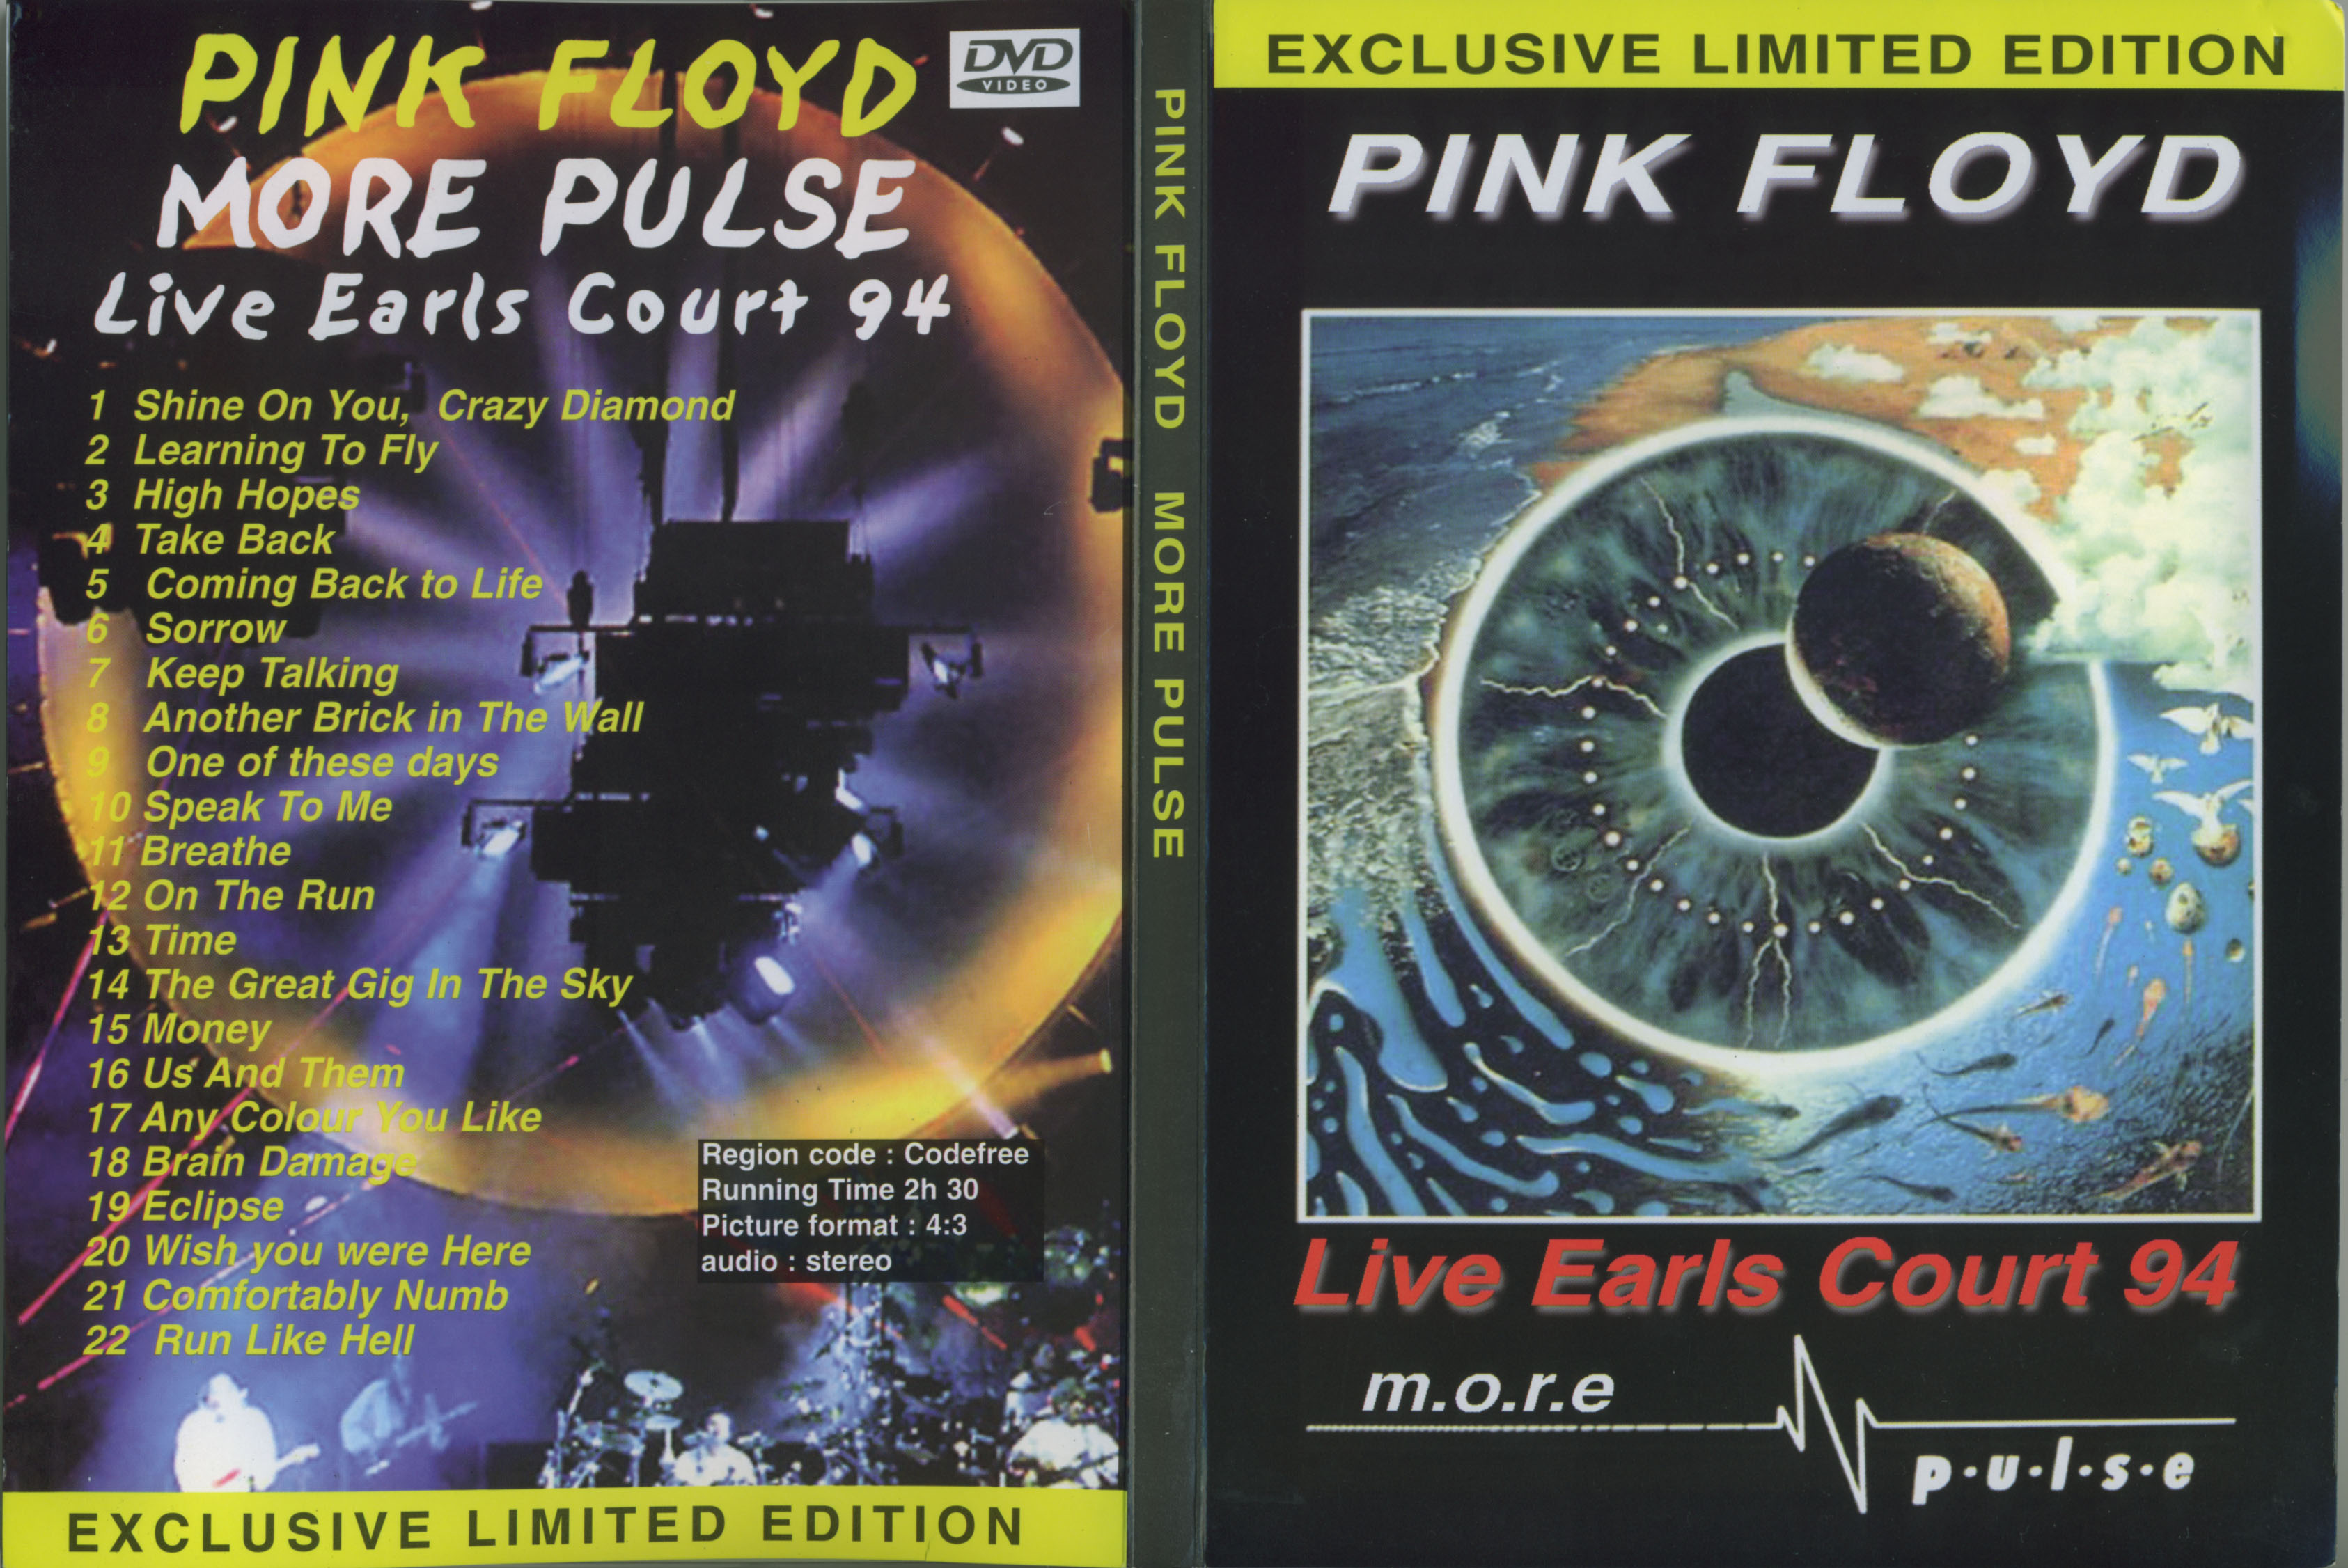 Jaquette DVD Pink Floyd Live earls court 94